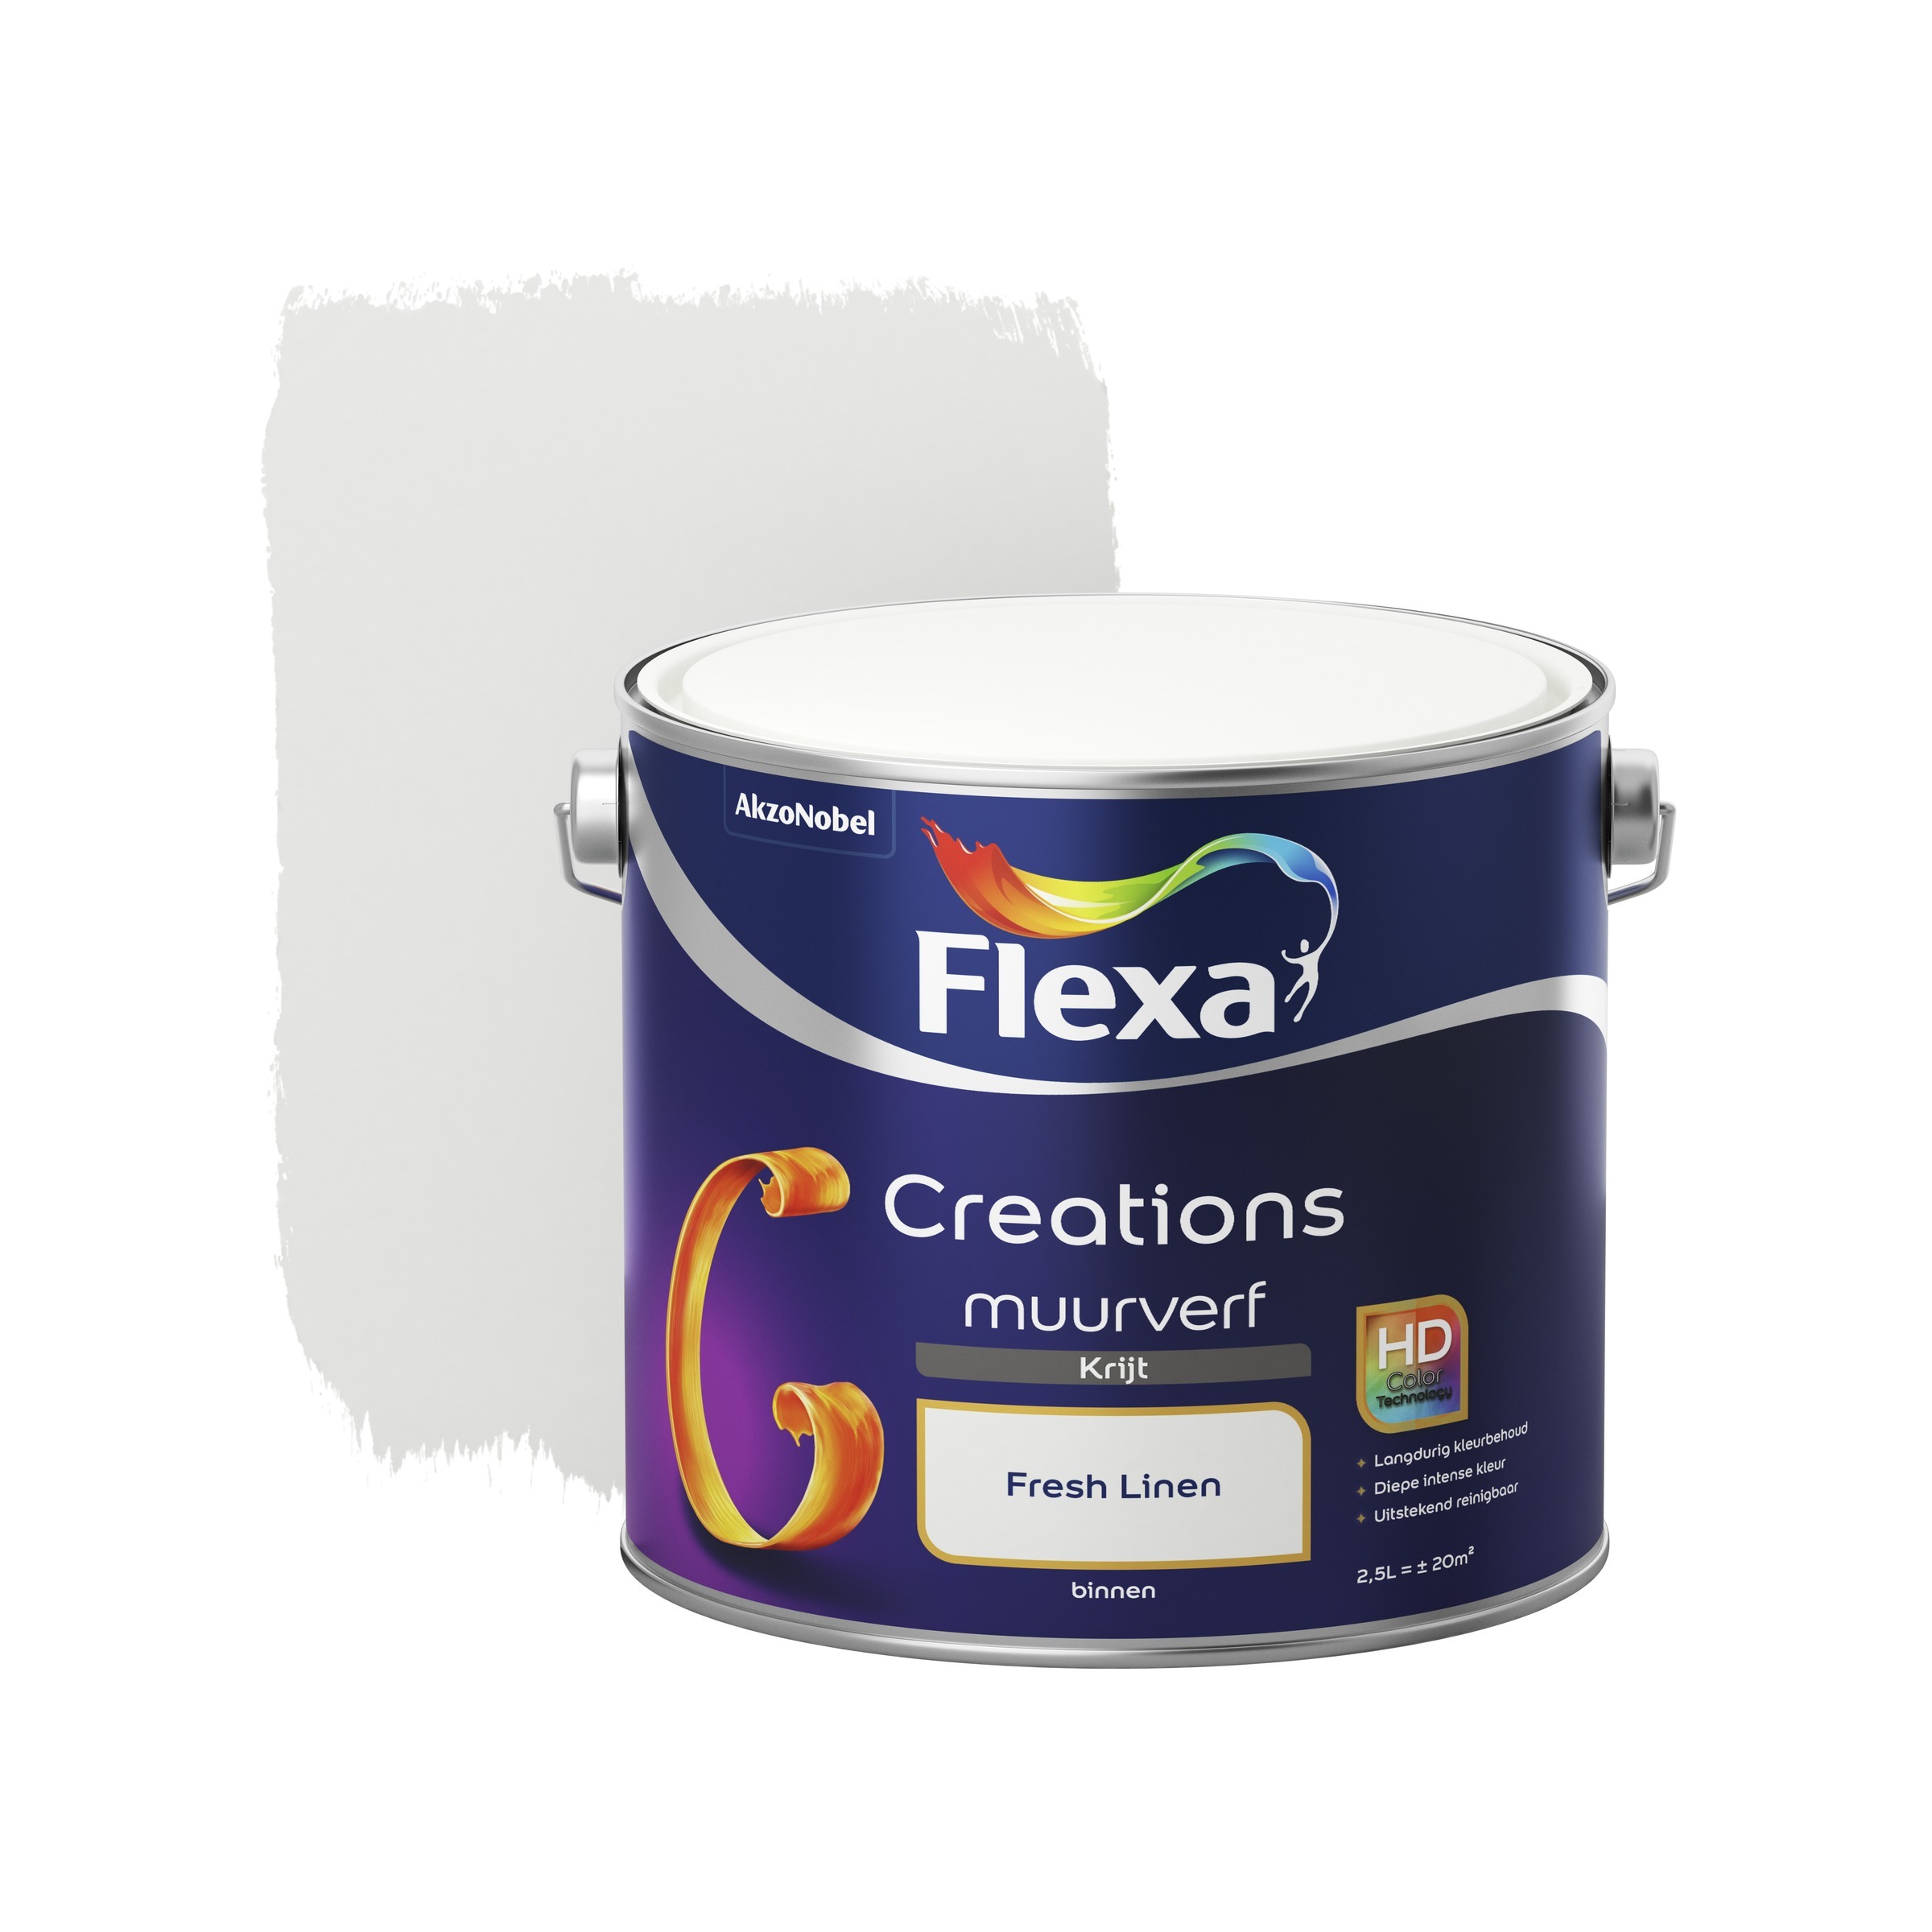 FLEXA Creations muurverf fresh linen krijt 2 5 liter